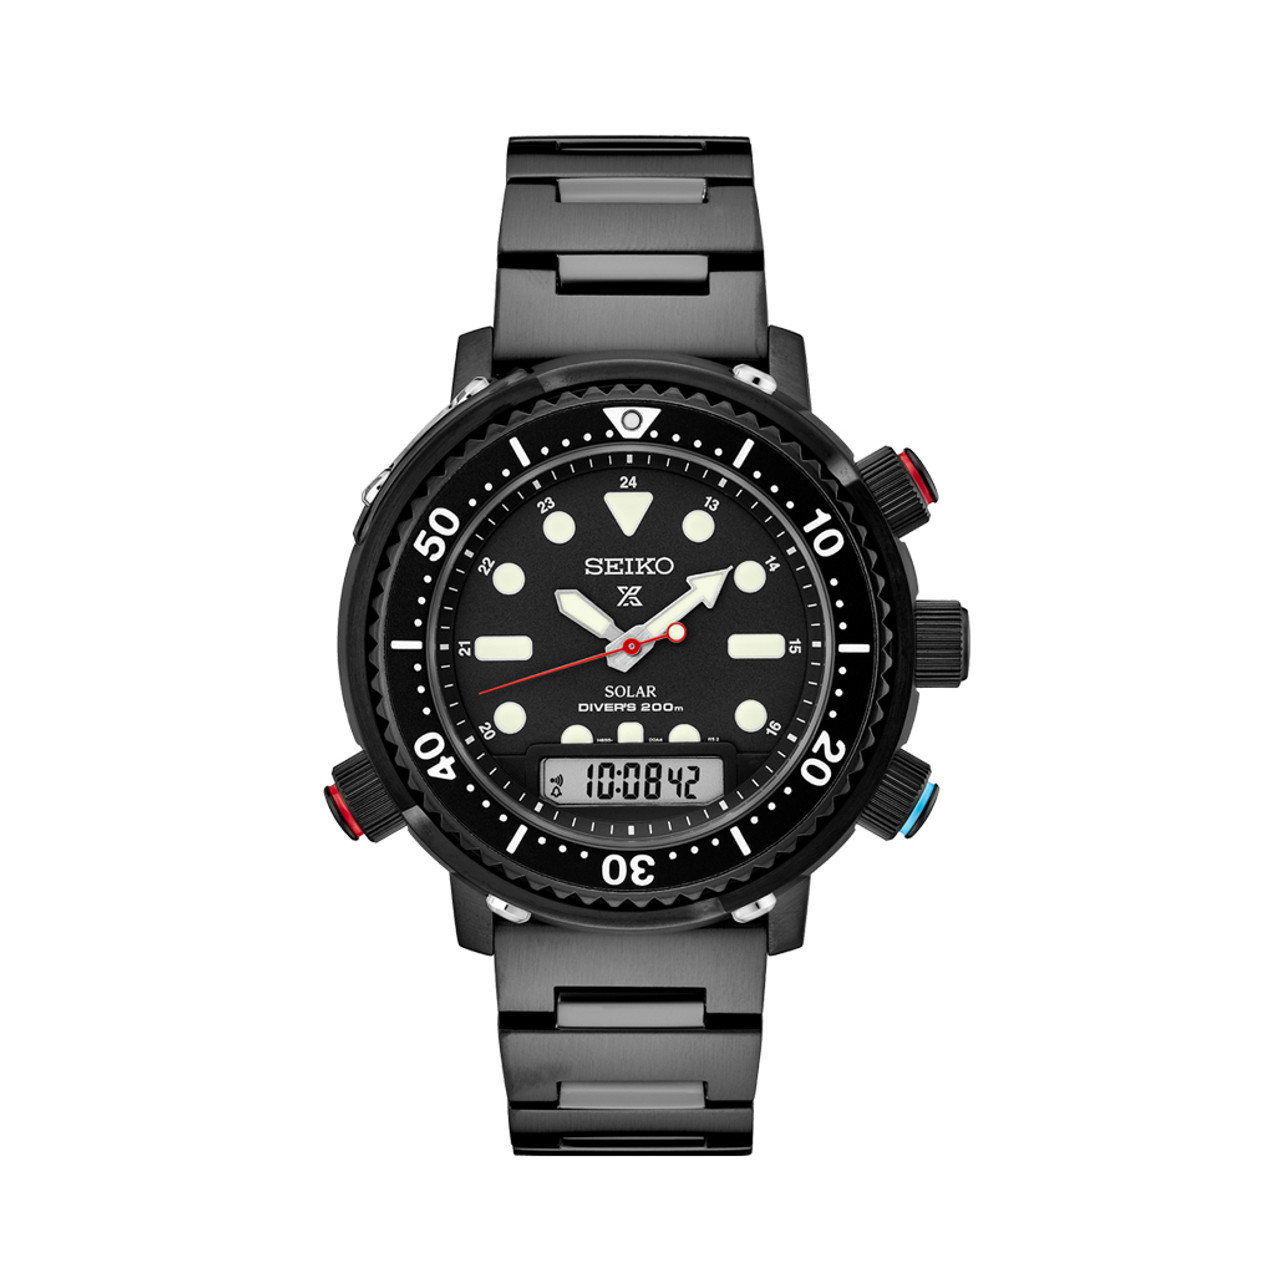 Seiko Prospex Limited Edition Black Analog-Digital Dive Watch Depth Meter,  Water Temp and Dive Log